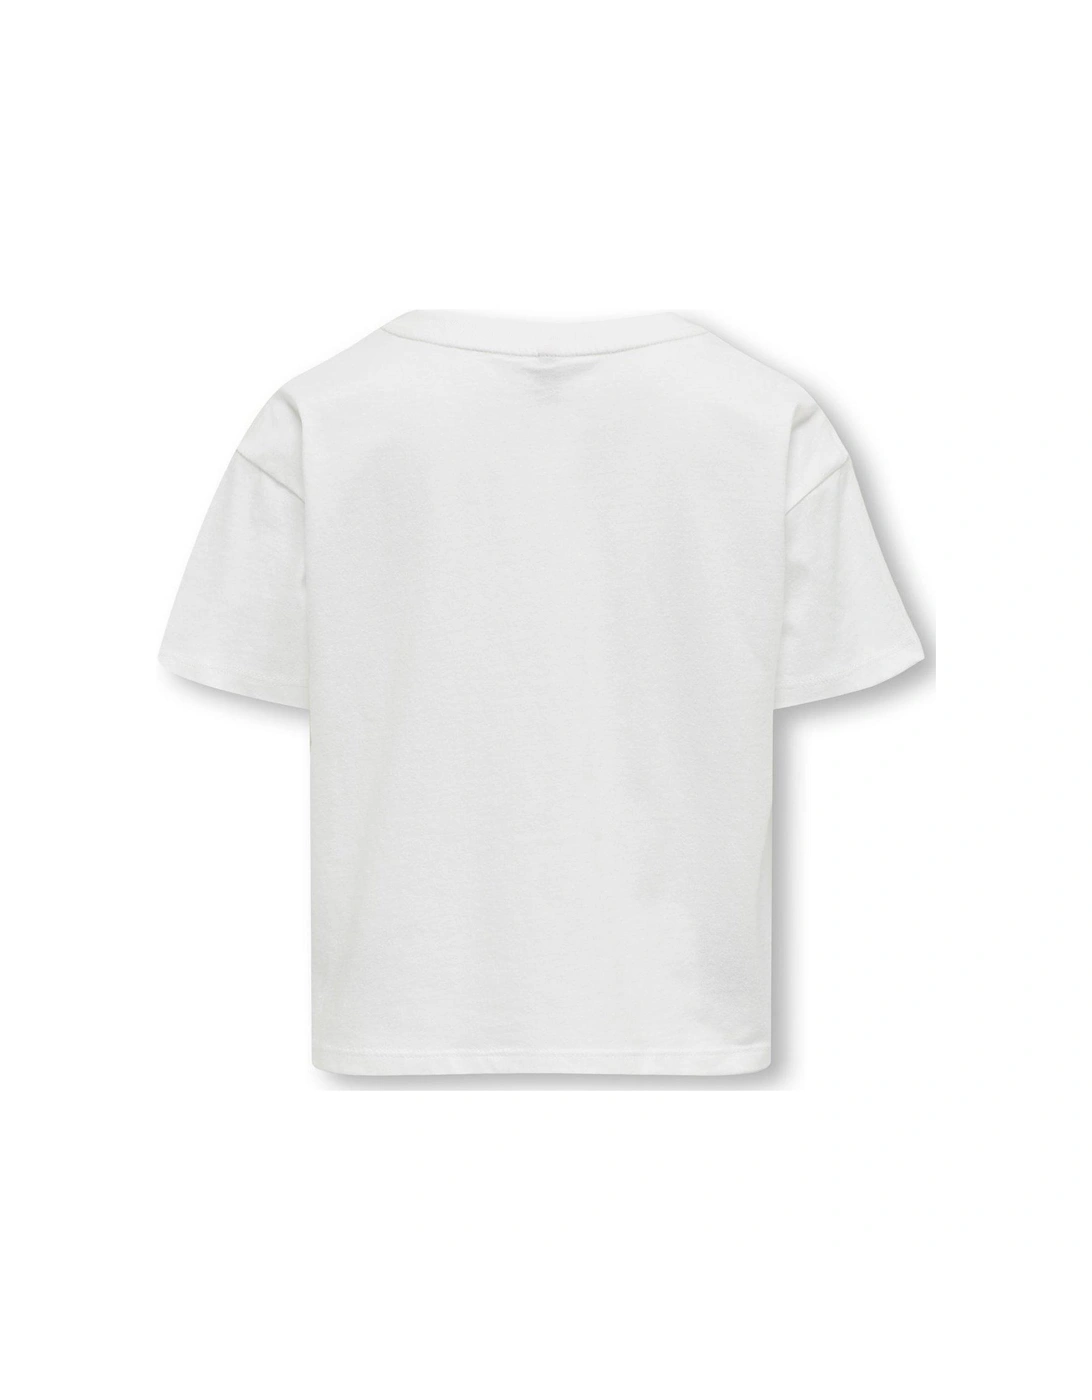 Girls Heart Print Short Sleeve Tshirt - Bright White